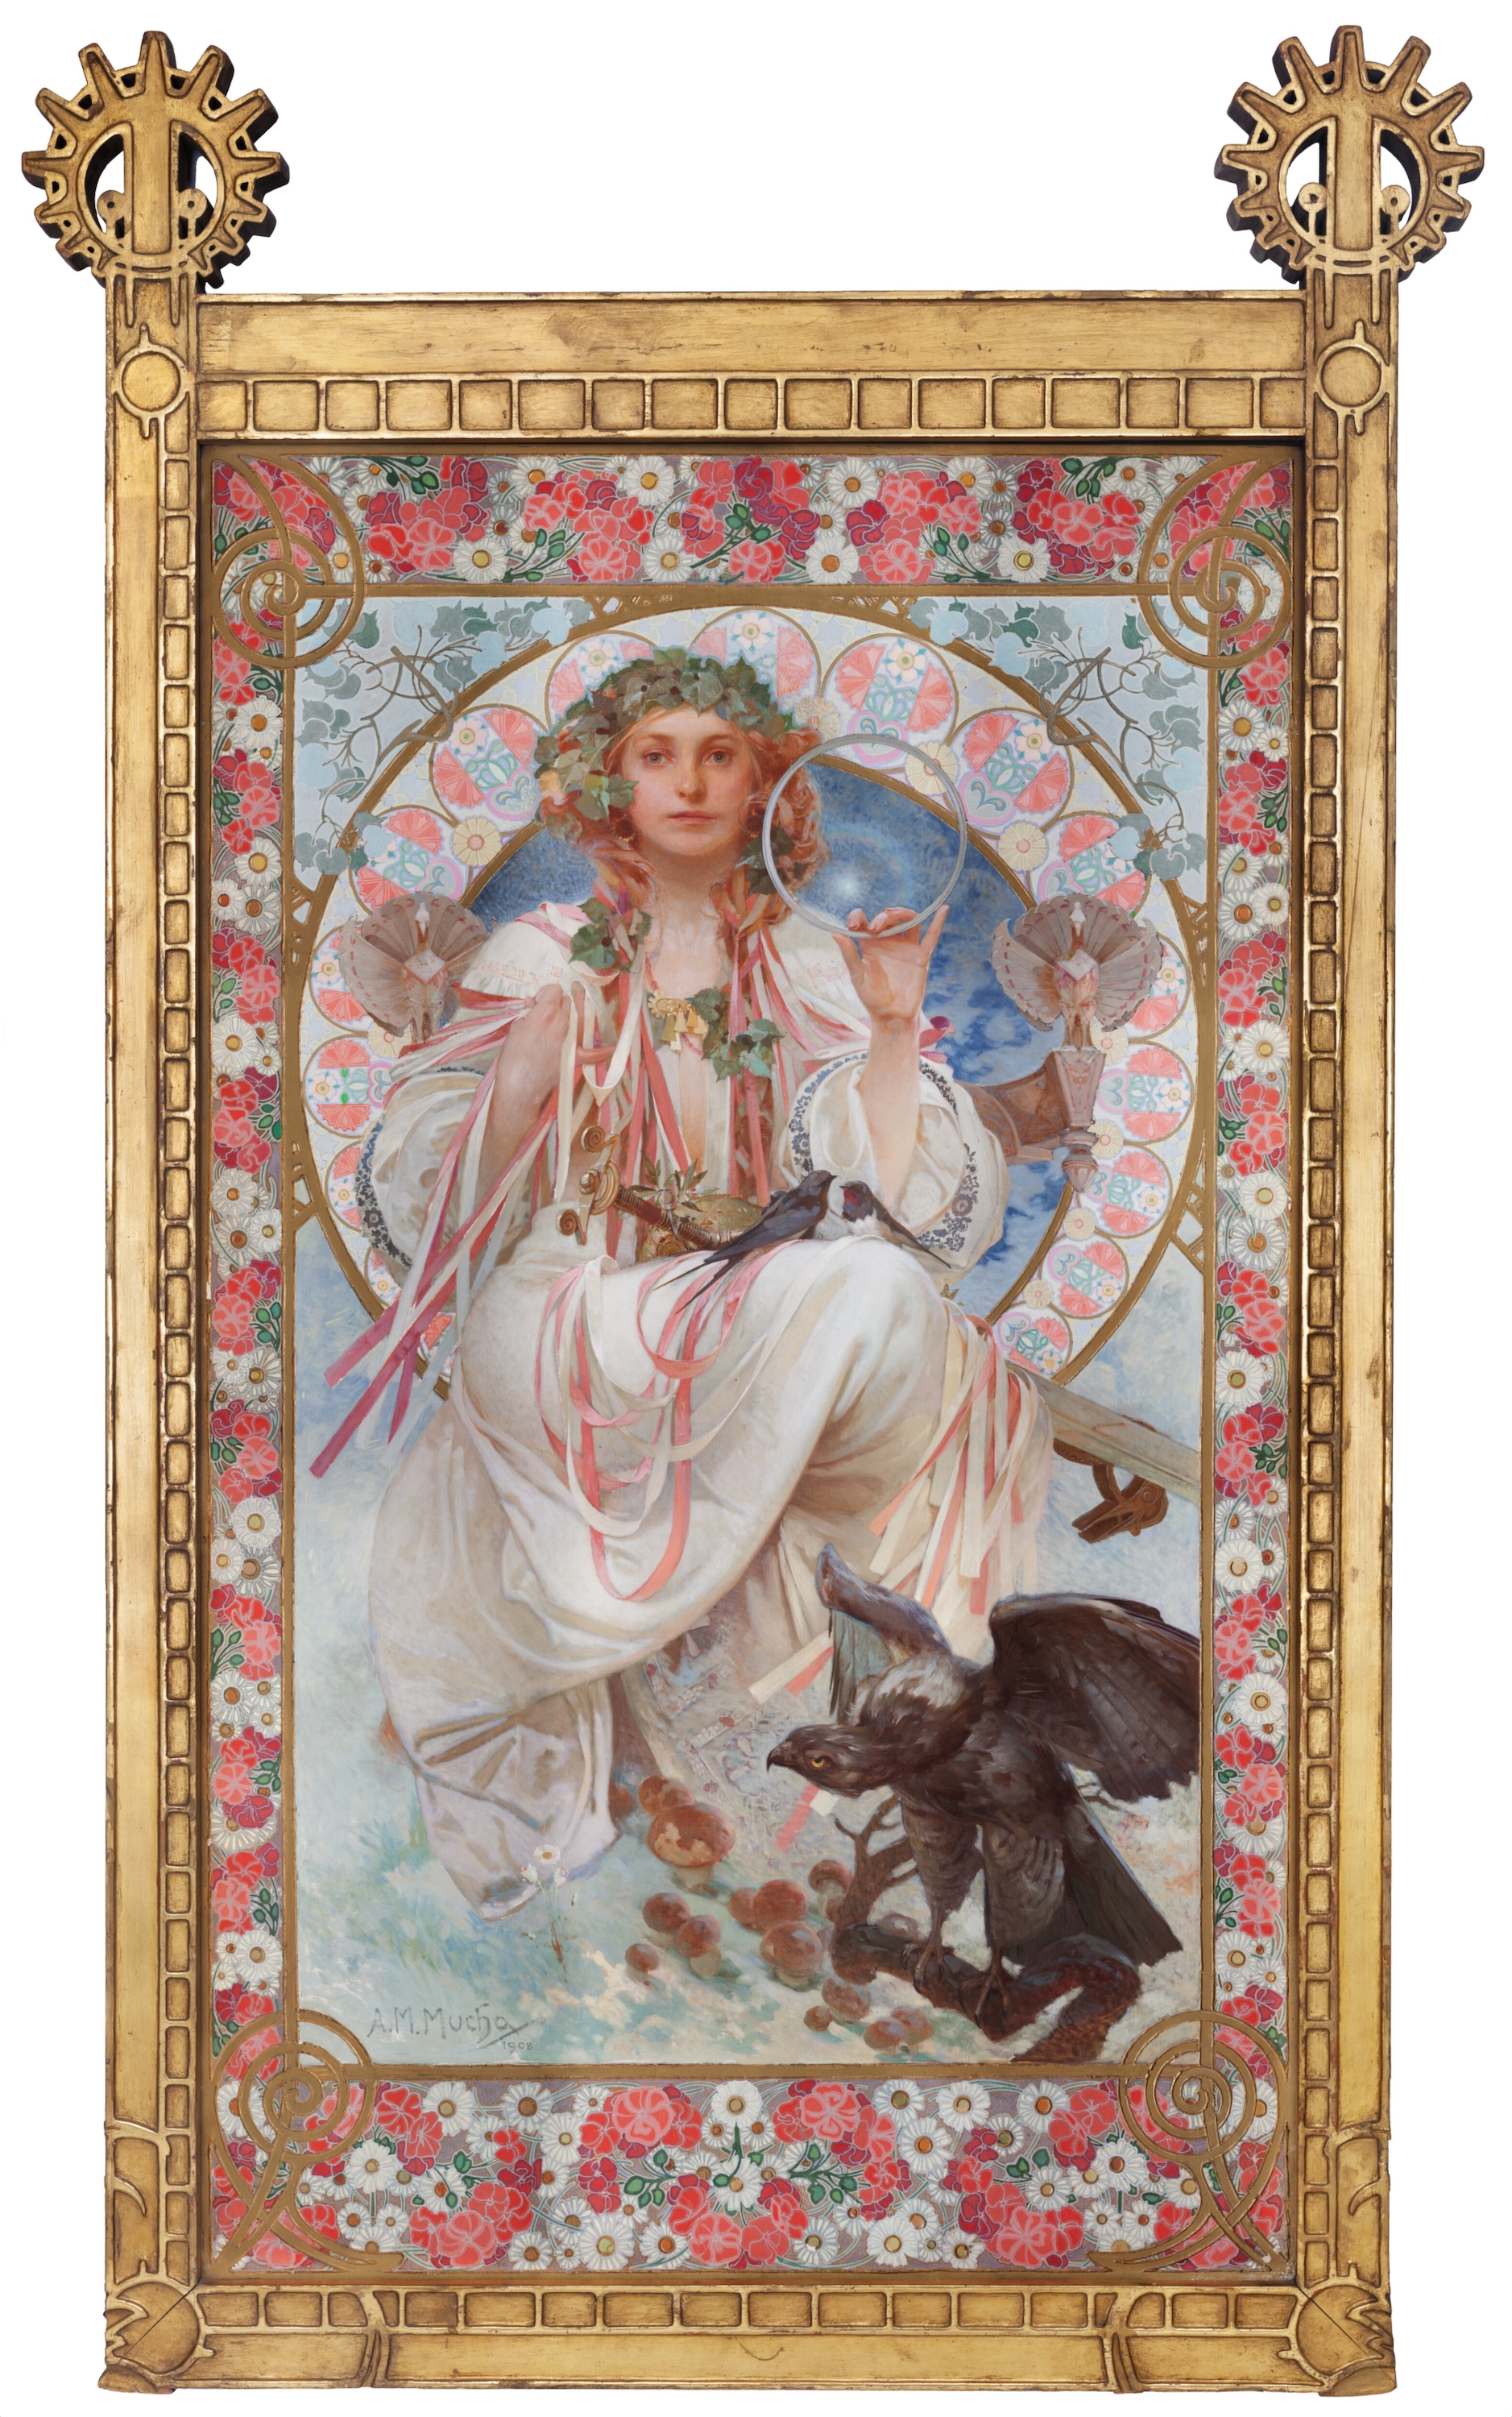 Retrato de Josephine Crane-Bradley como Slavia by Alphonse Mucha - 1908 - 154 x 92,5 cm 